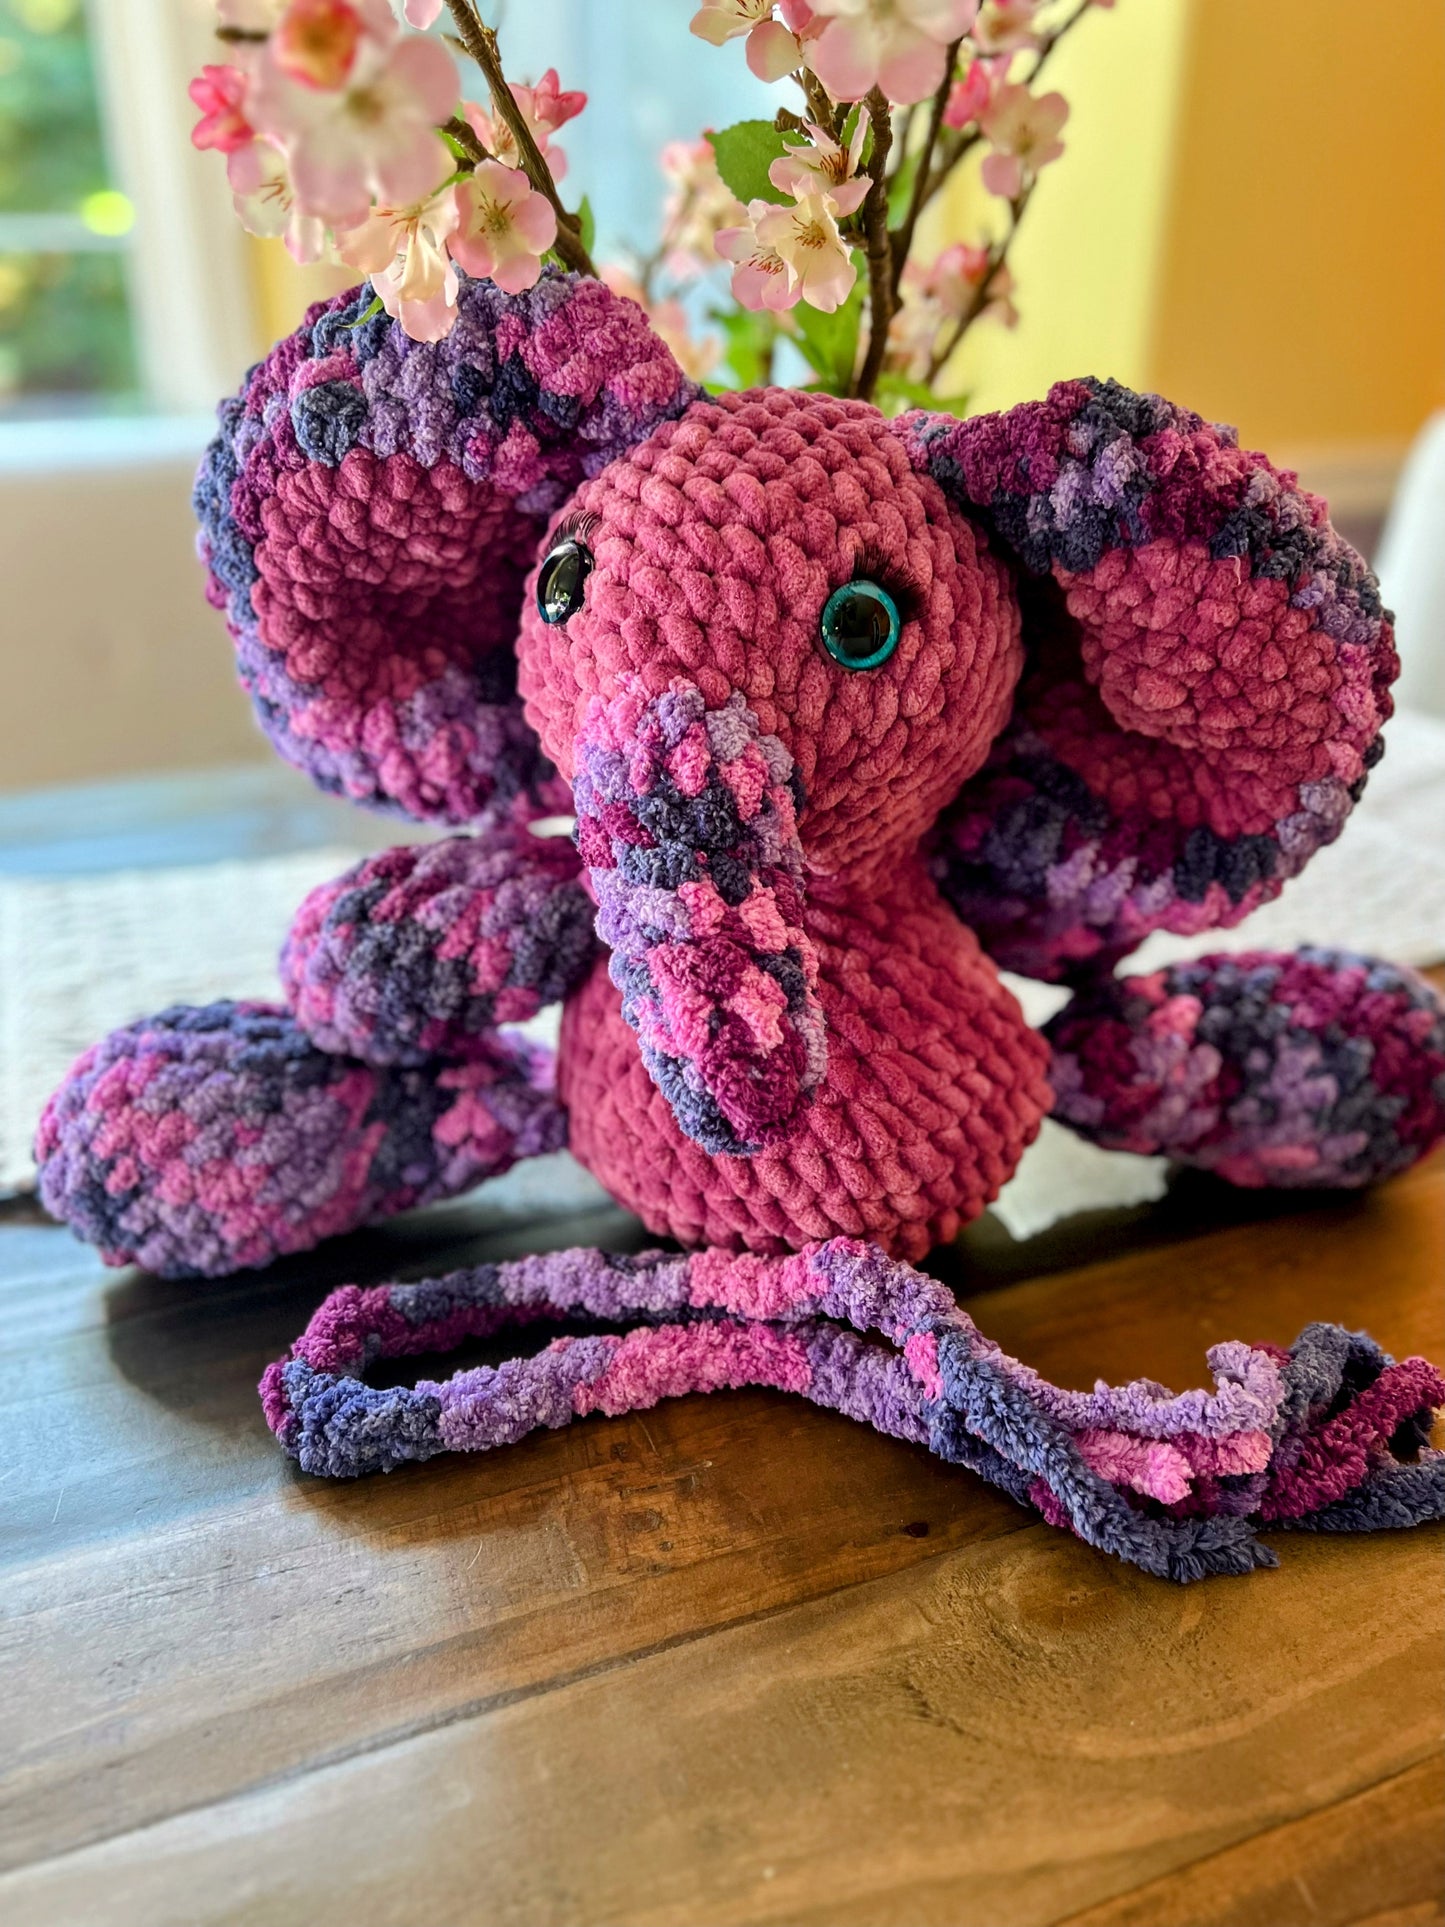 Stuffed Giant Elephant- Crochet Knitted Amigurumi Toy